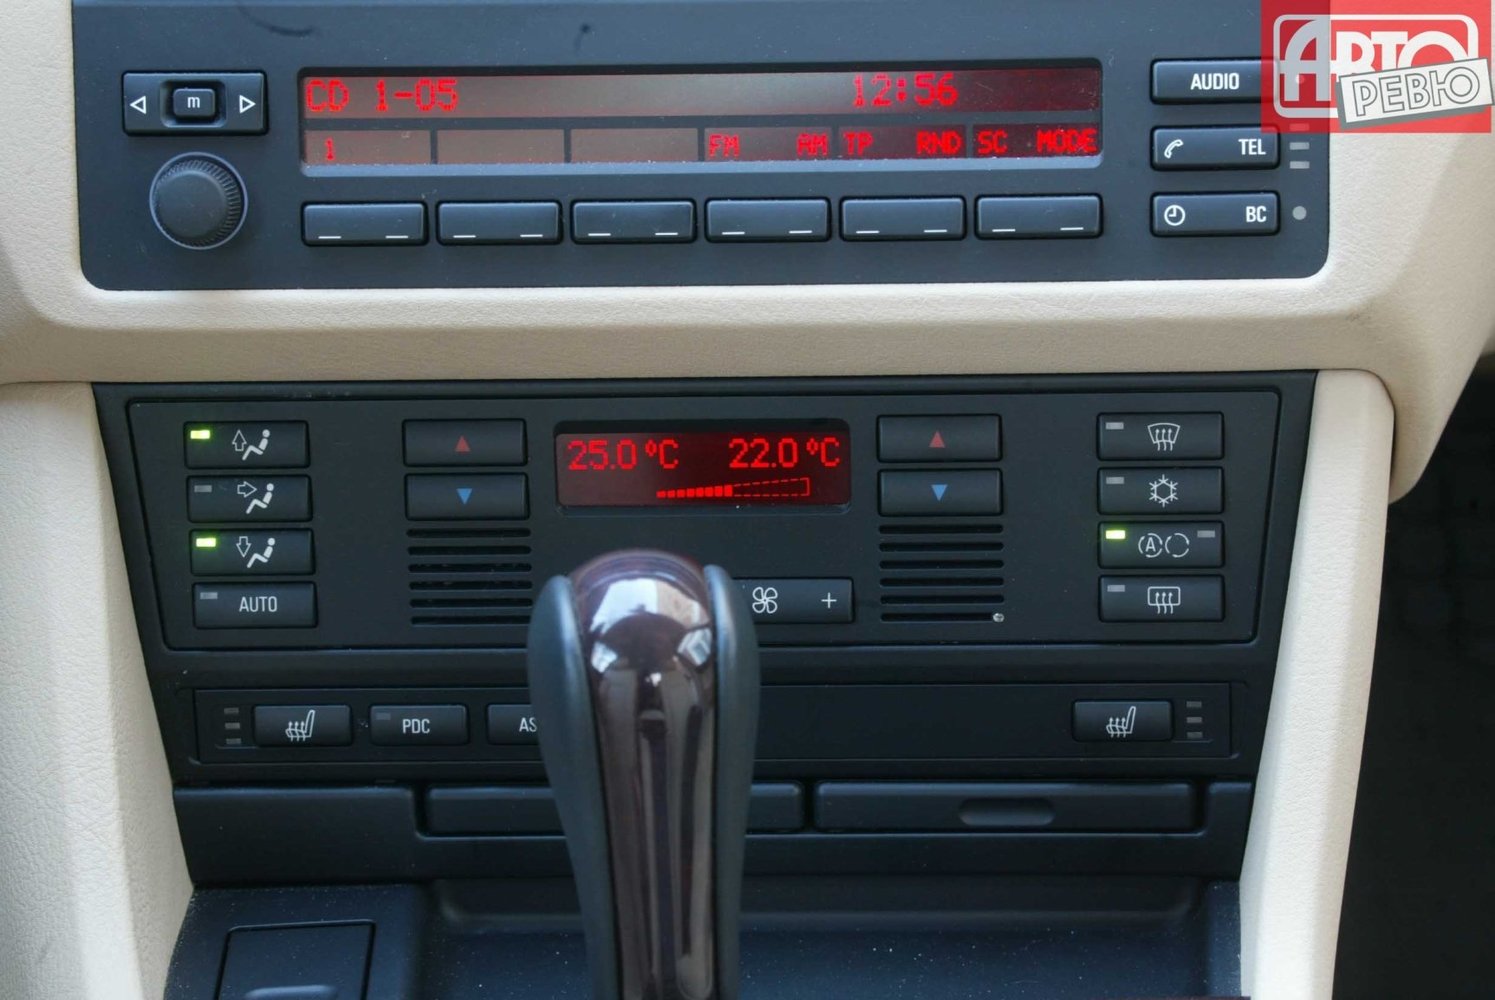 седан BMW 5er 2000 - 2004г выпуска модификация 2.0 AT (136 л.с.)